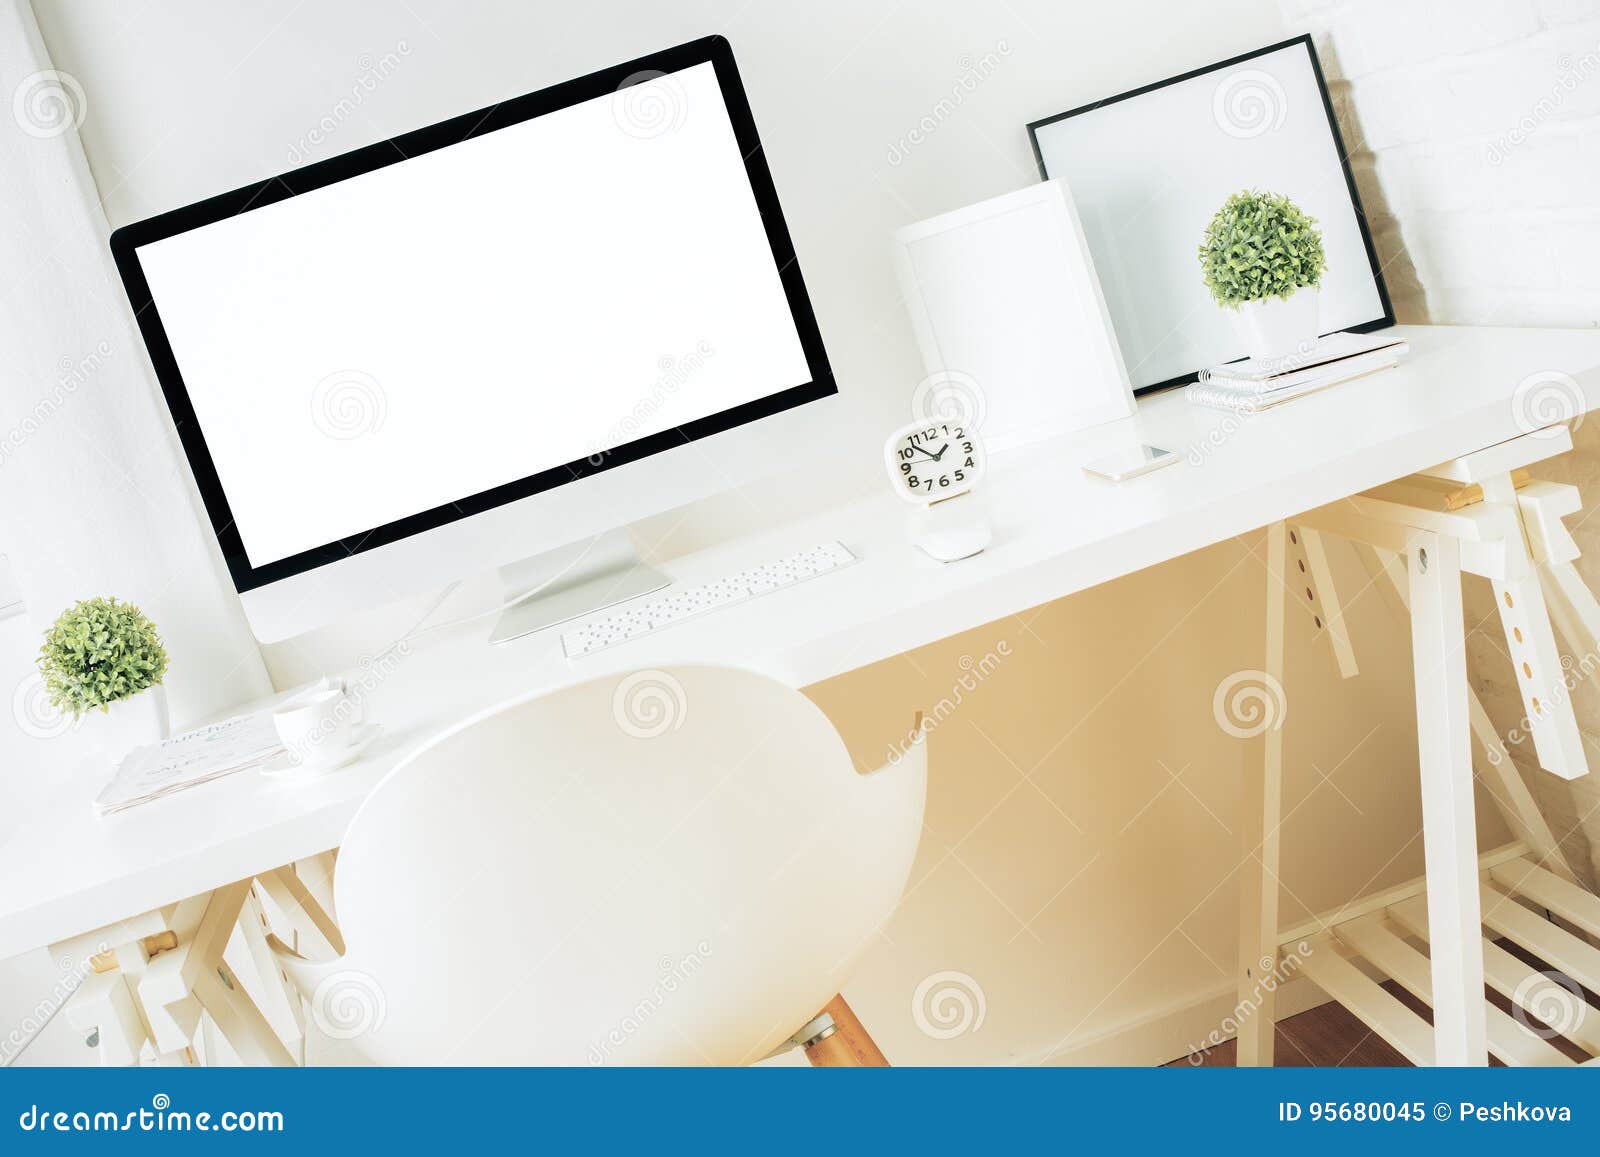 Designer Desktop with Empty Computer Screen Stock Image - Image of ...